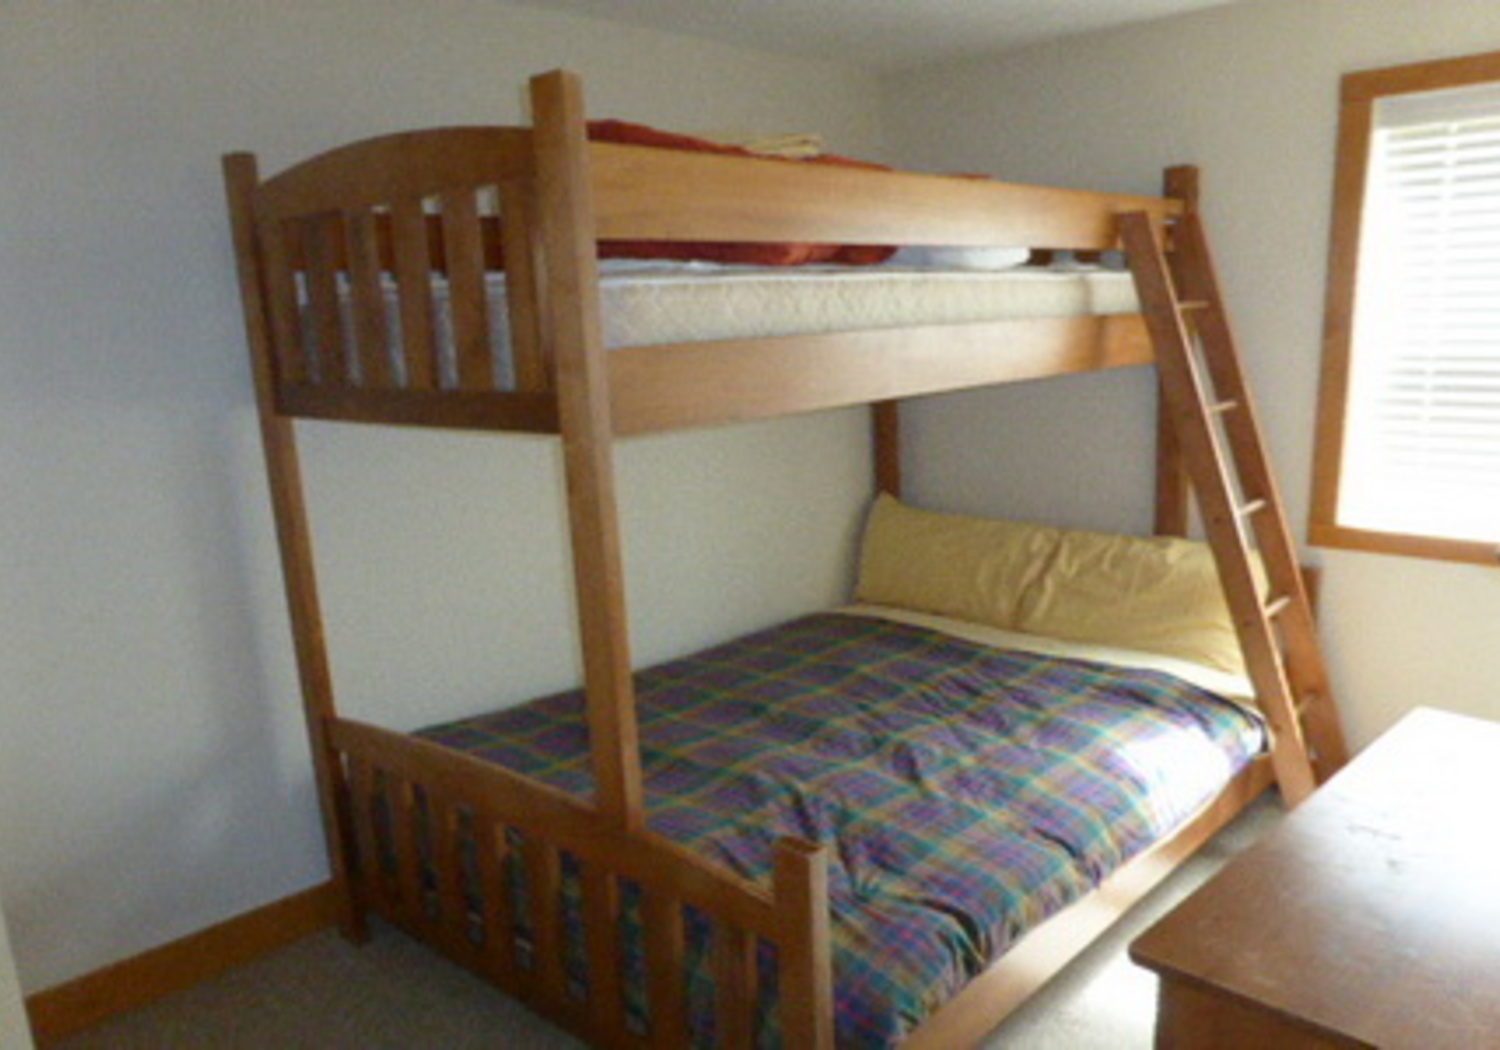 4 Bedroom Units Kimberley Lodging Co, Ethan Allen Bunk Beds Used